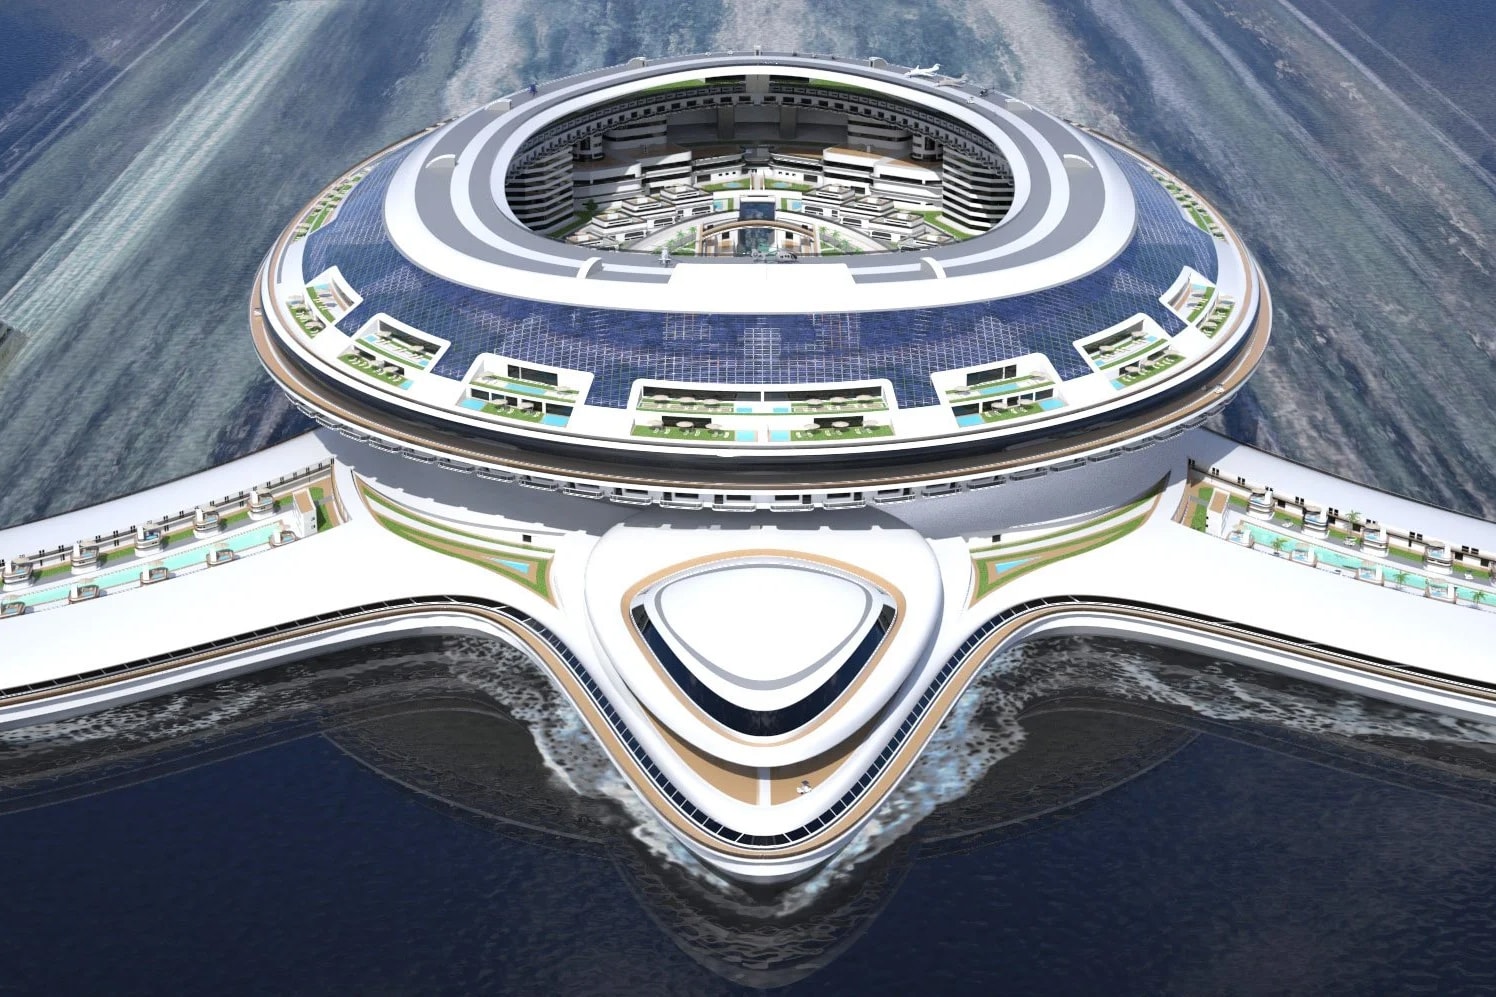 Lazzarini Design Studio Saudi Arabia Pangeos terayacht 8 billion usd floating city megaproject info 